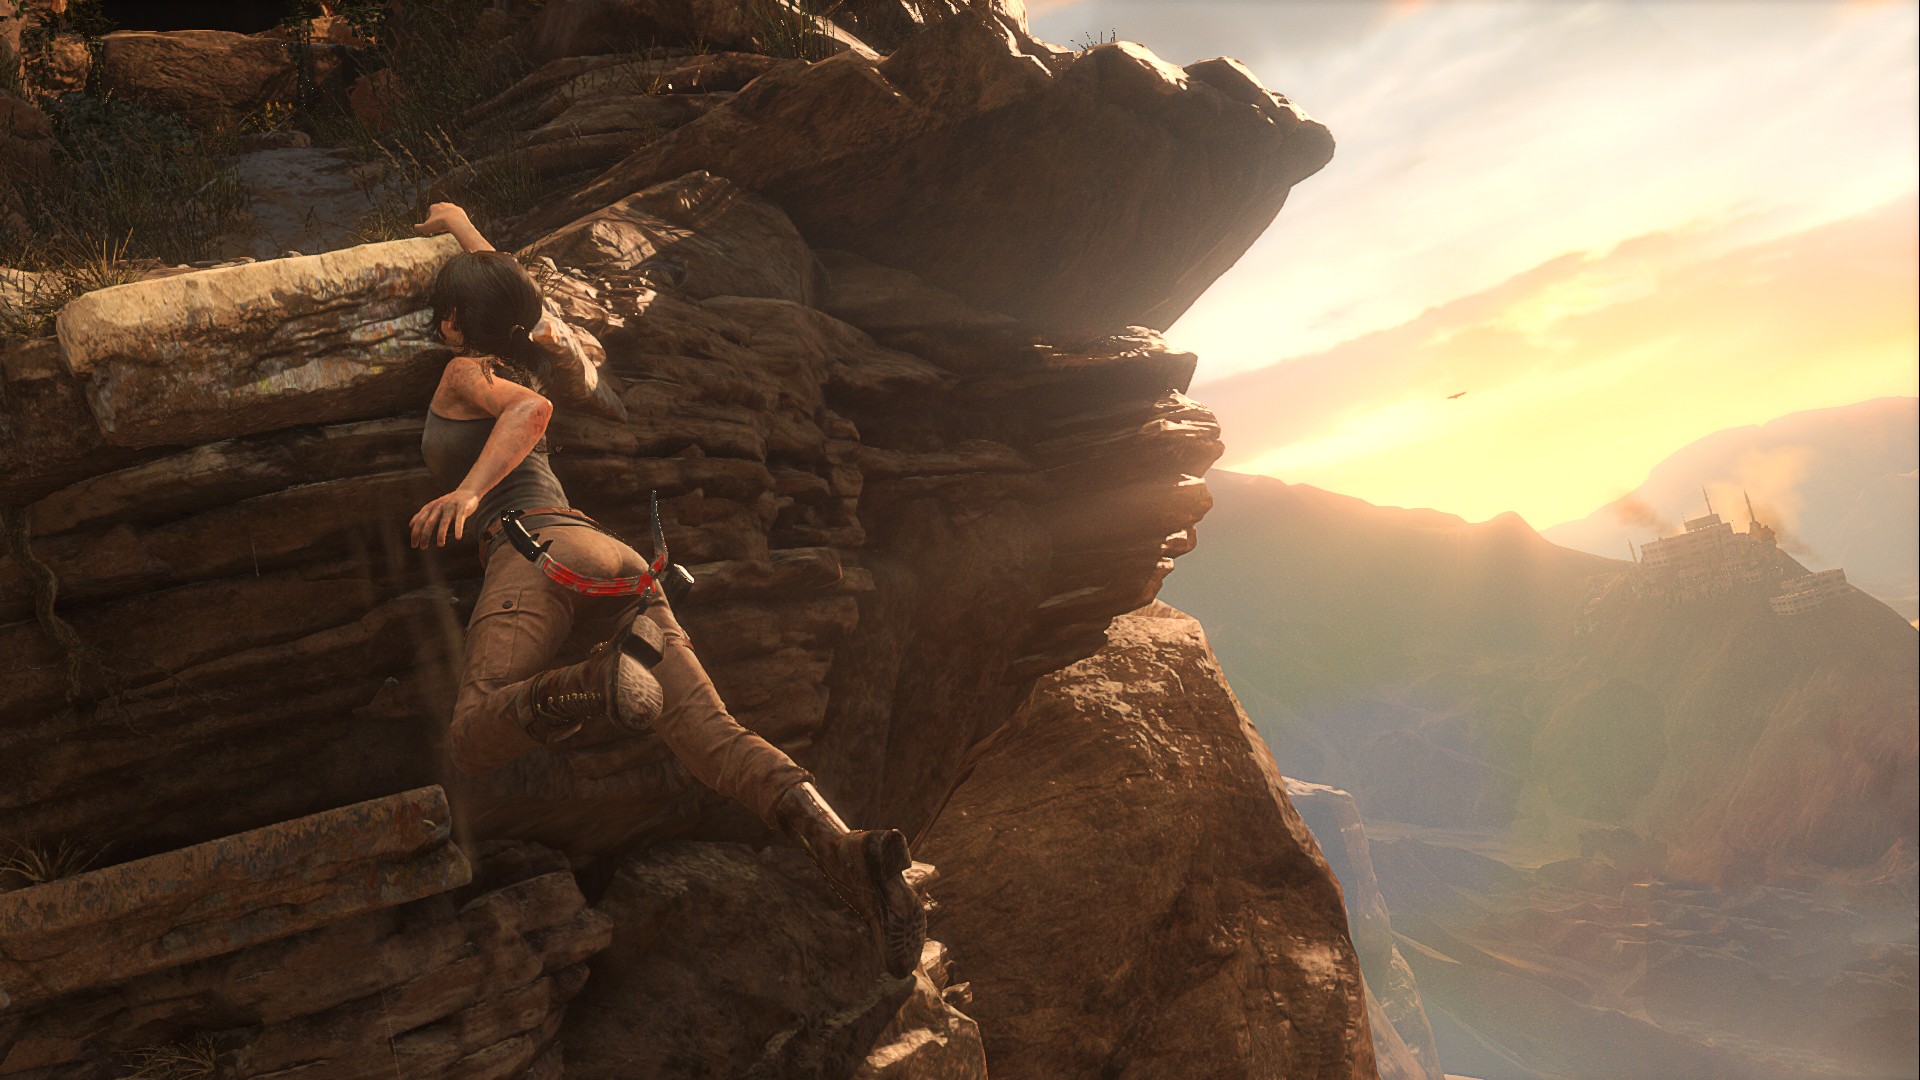 General 1920x1080 PC gaming Lara Croft (Tomb Raider) Rise of the Tomb Raider rock climbing screen shot video games